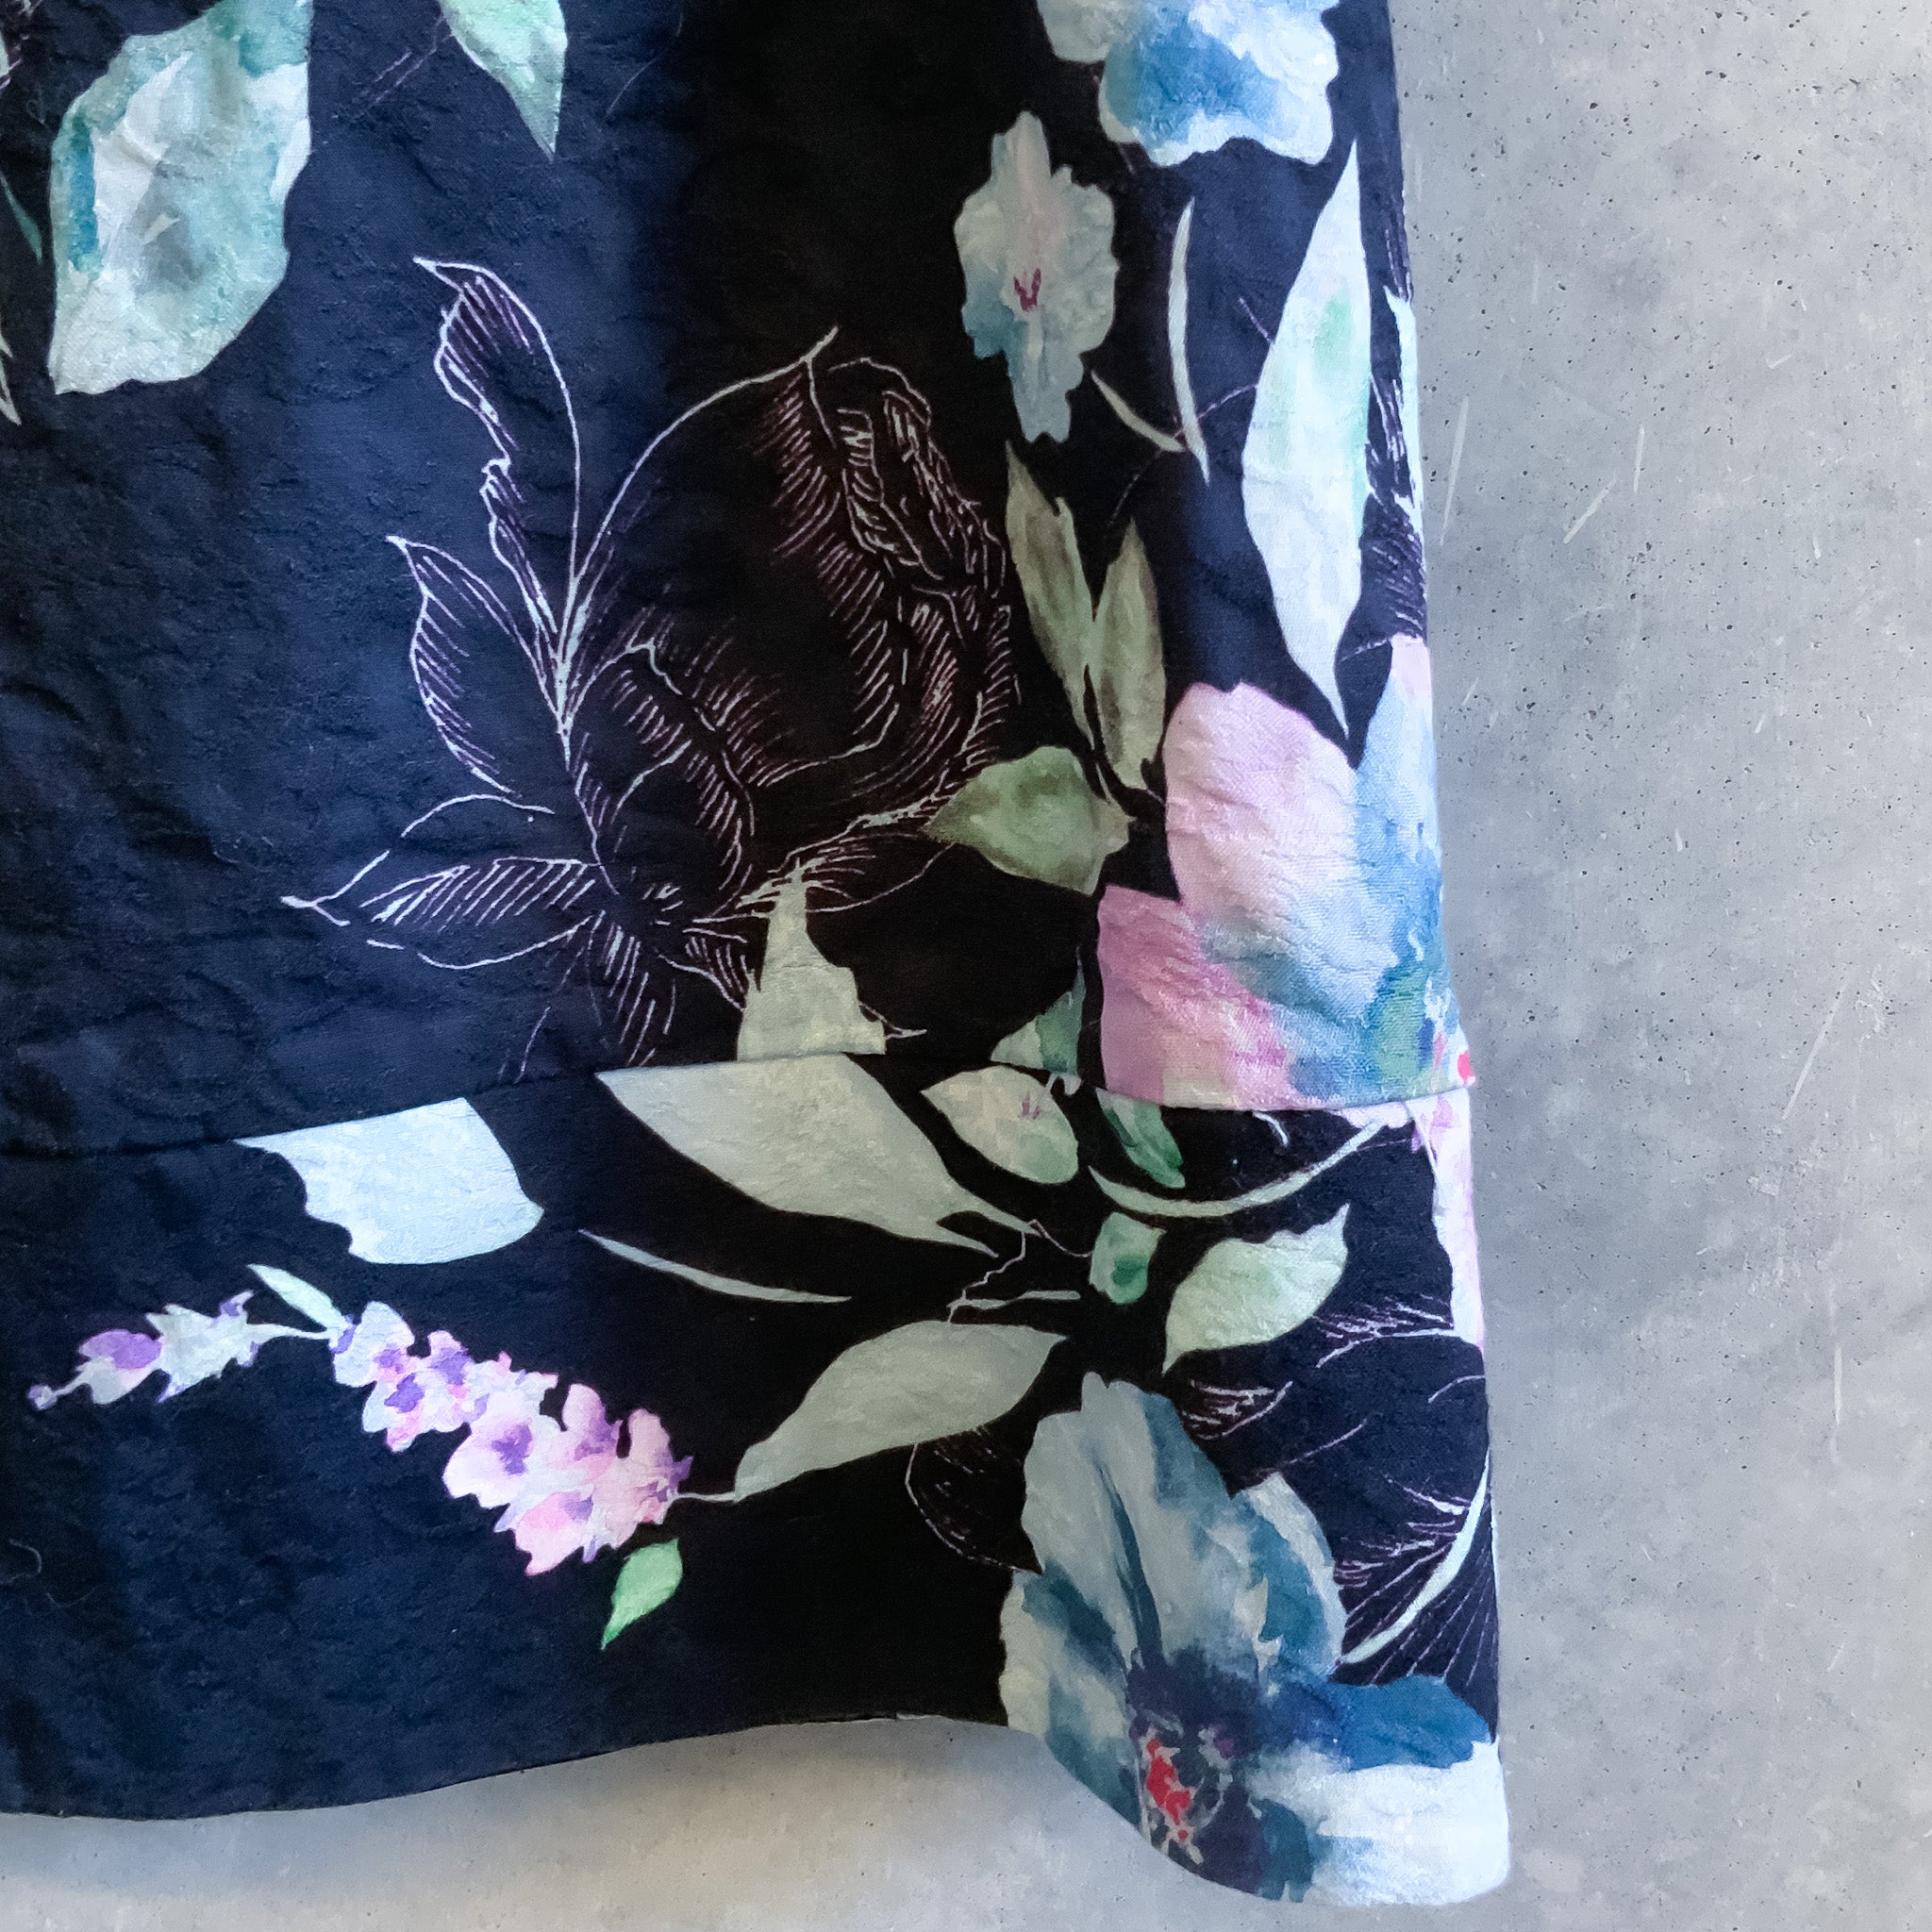 ALANNAH HILL “Her Splendour” Navy Floral Embossed A Line Skirt - Size 12